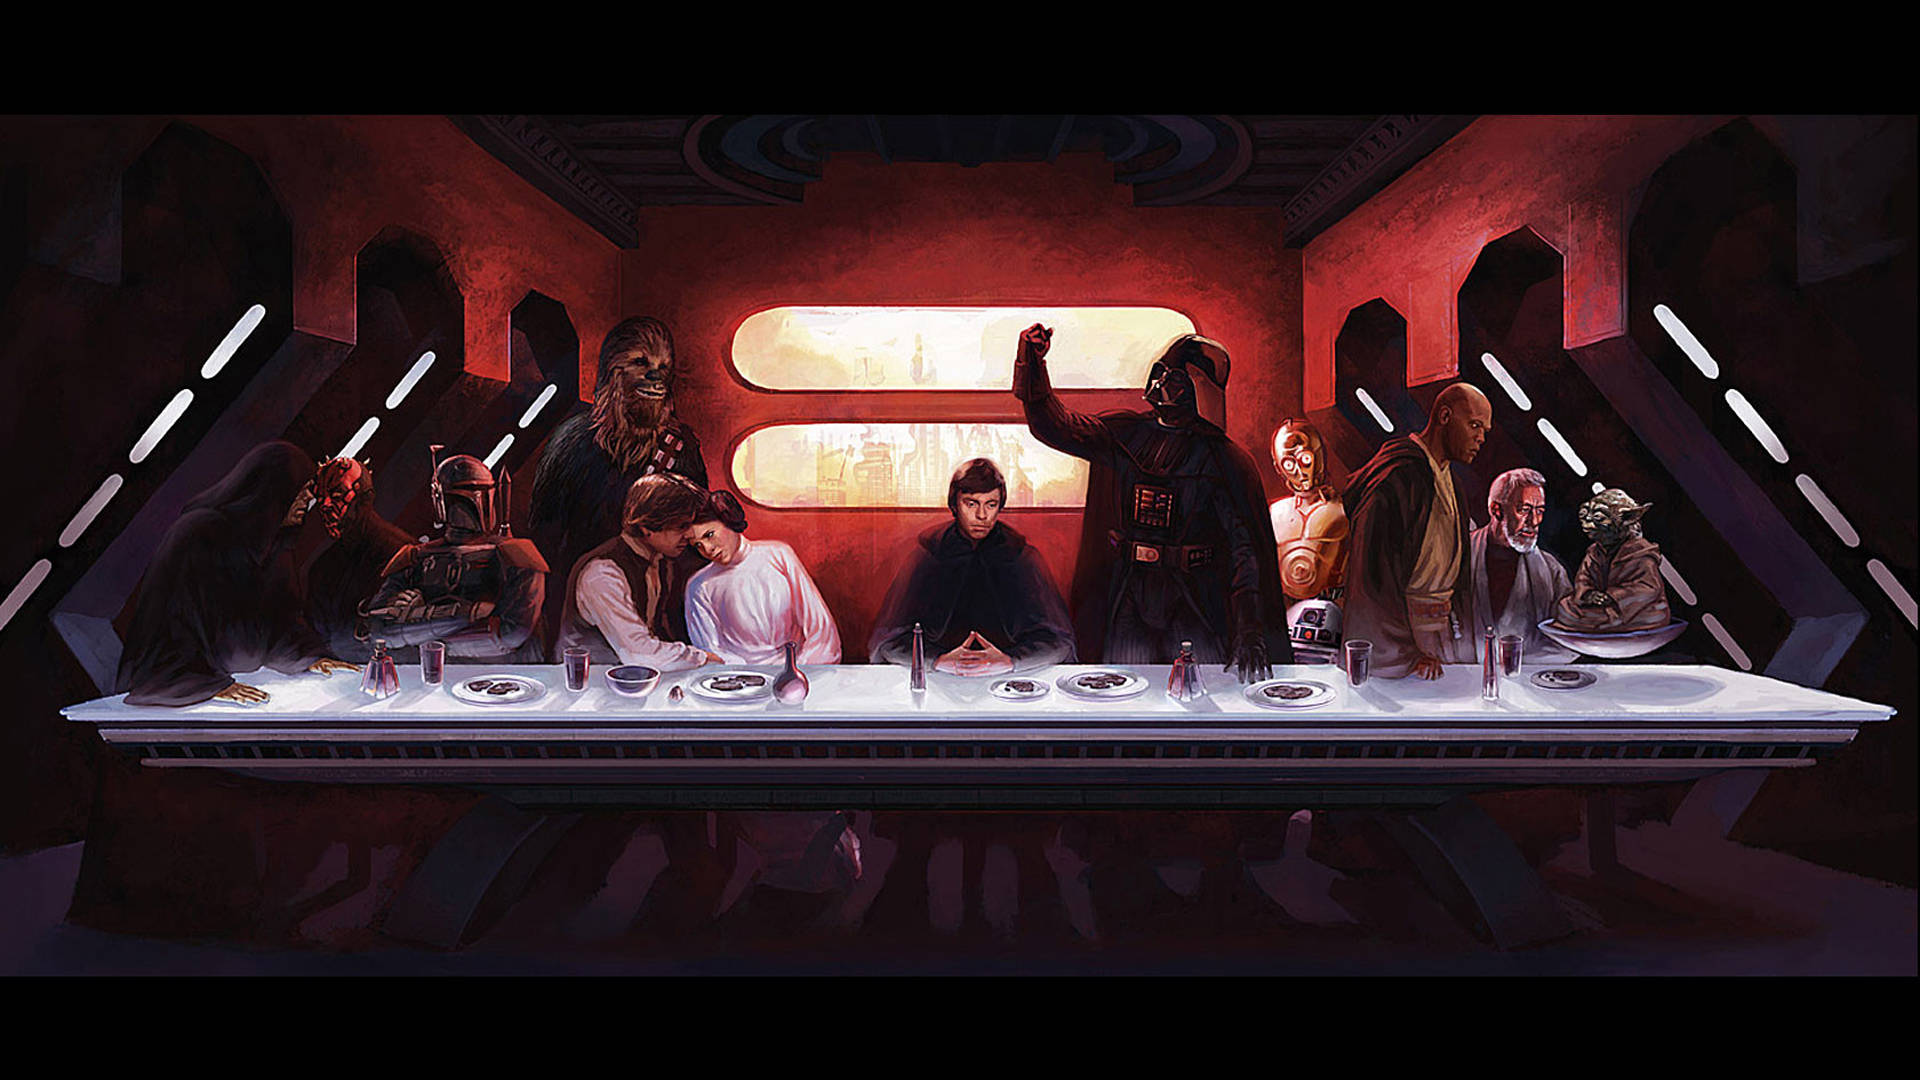 Cools Star Wars Meeting Wallpaper